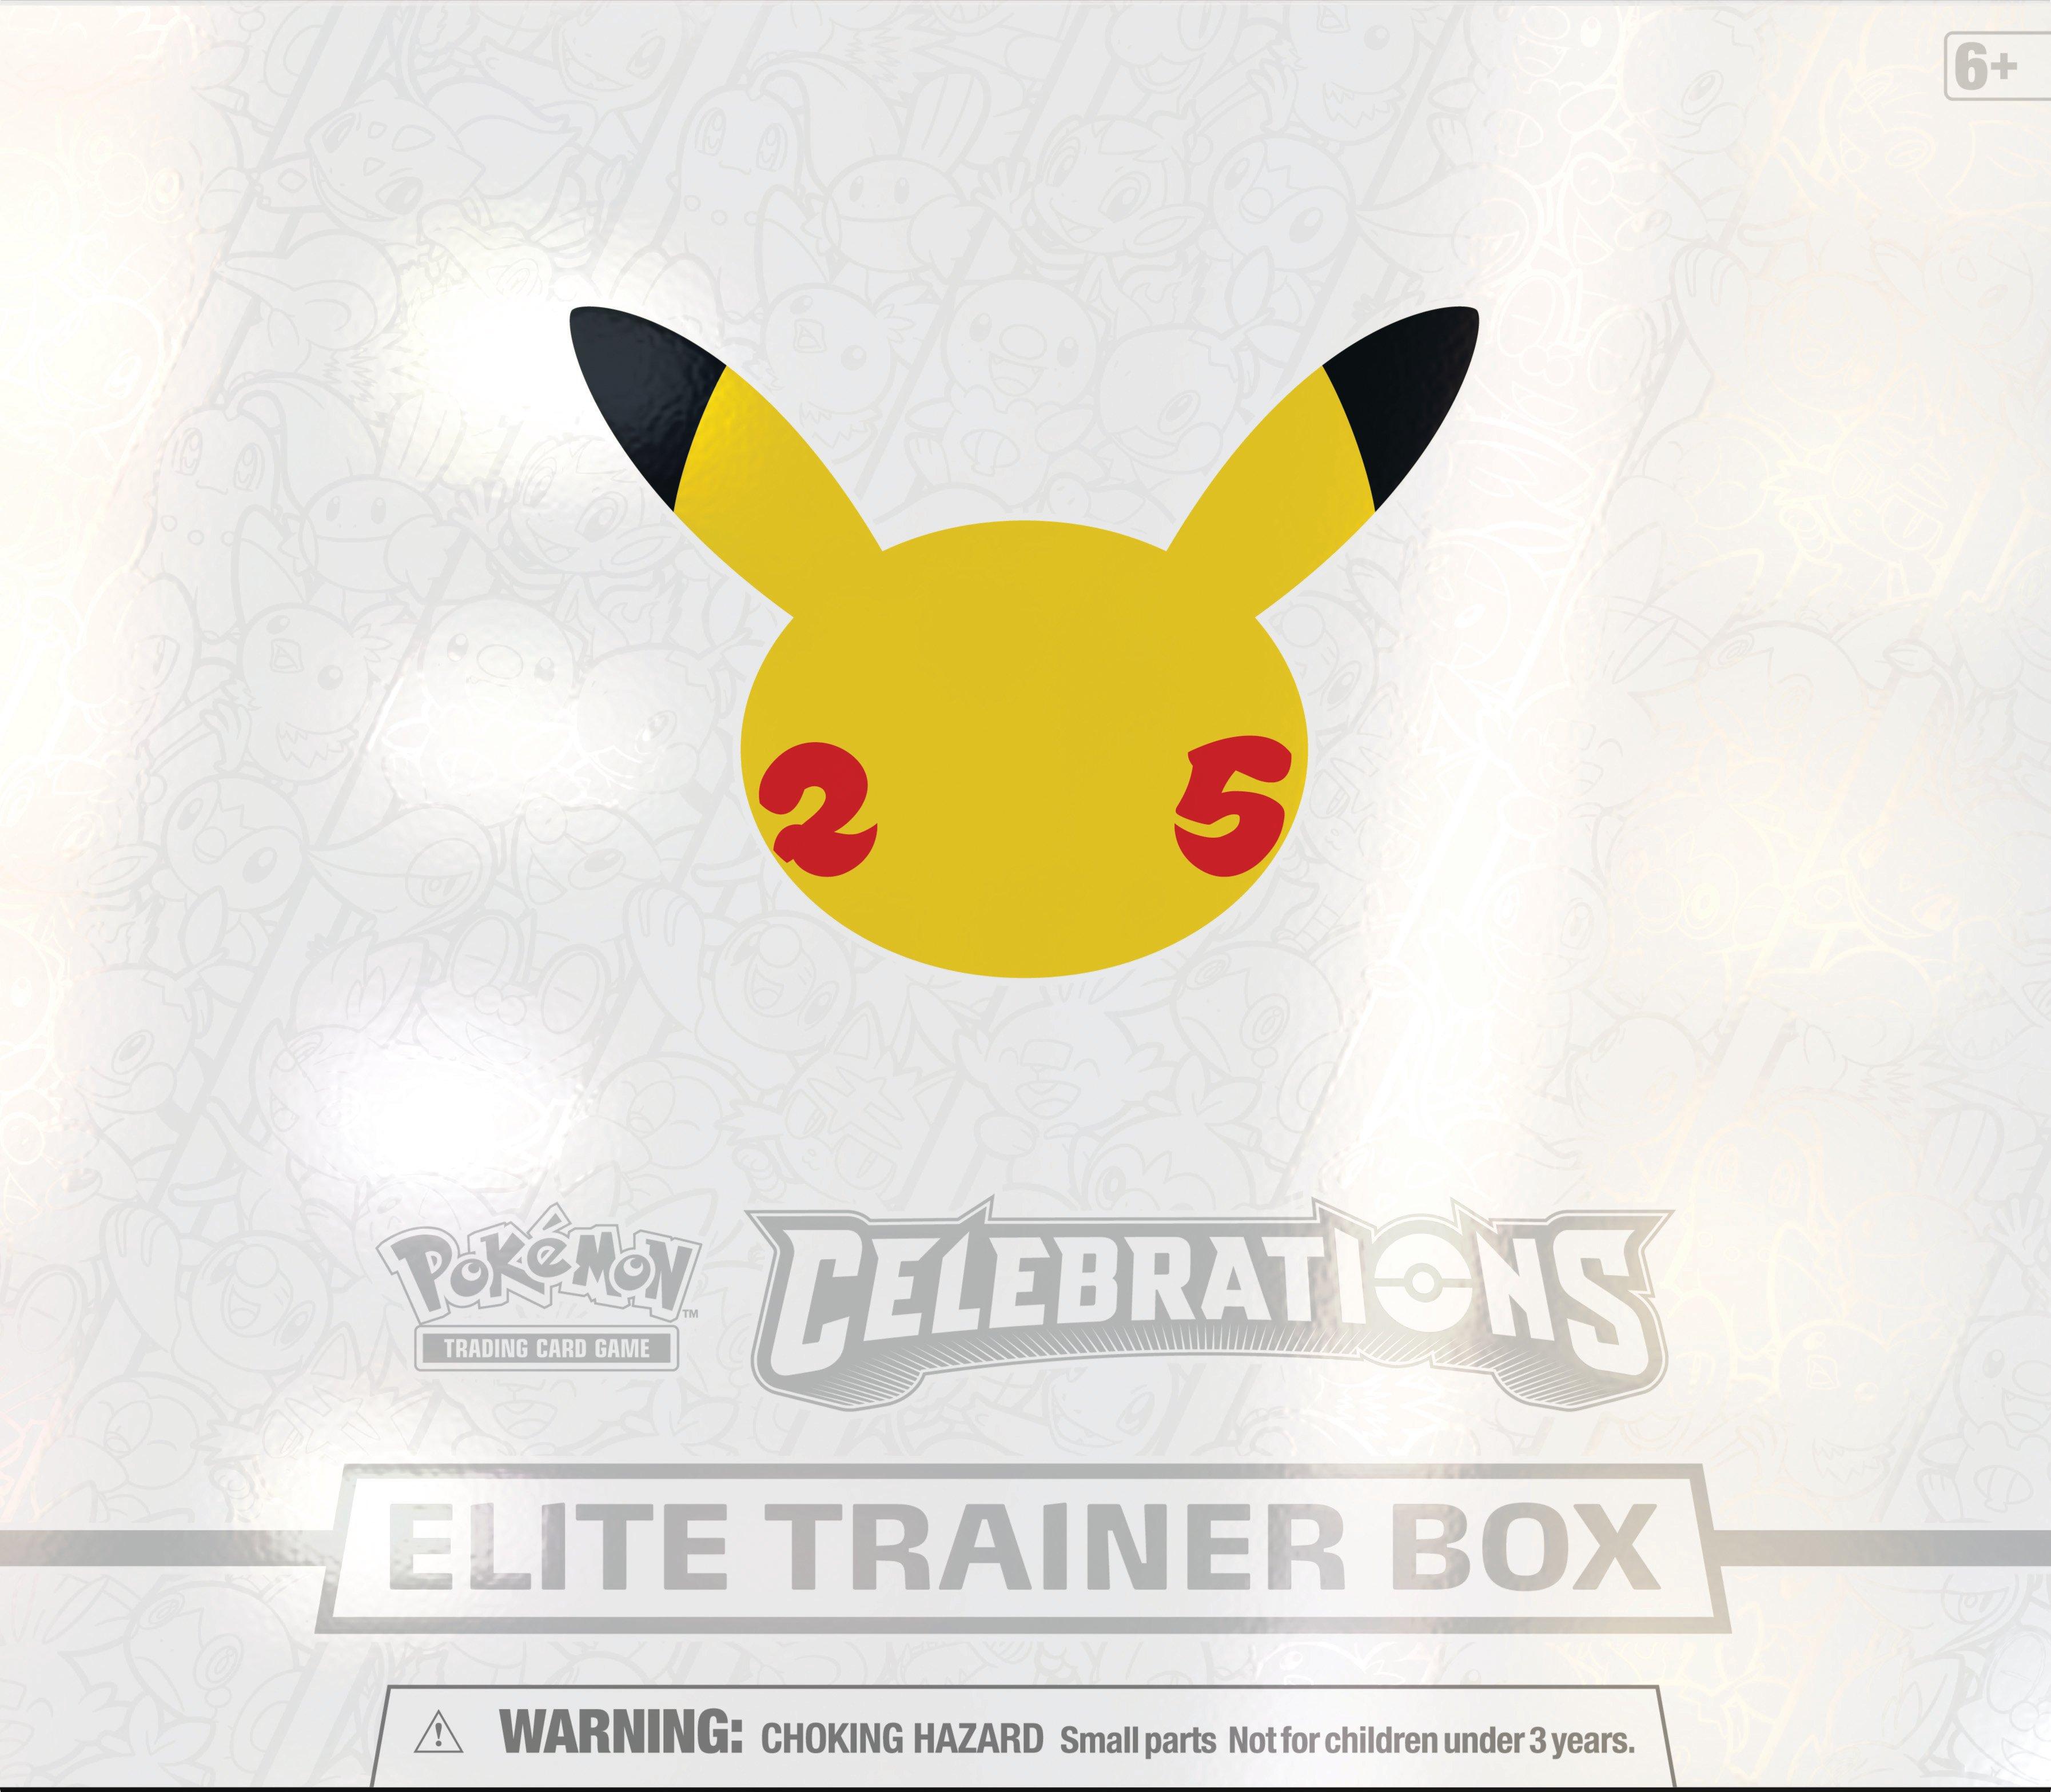 Gamestop - Pokemon TCG Celebrations Elite Trainer Box - $49.99 - Free shipping